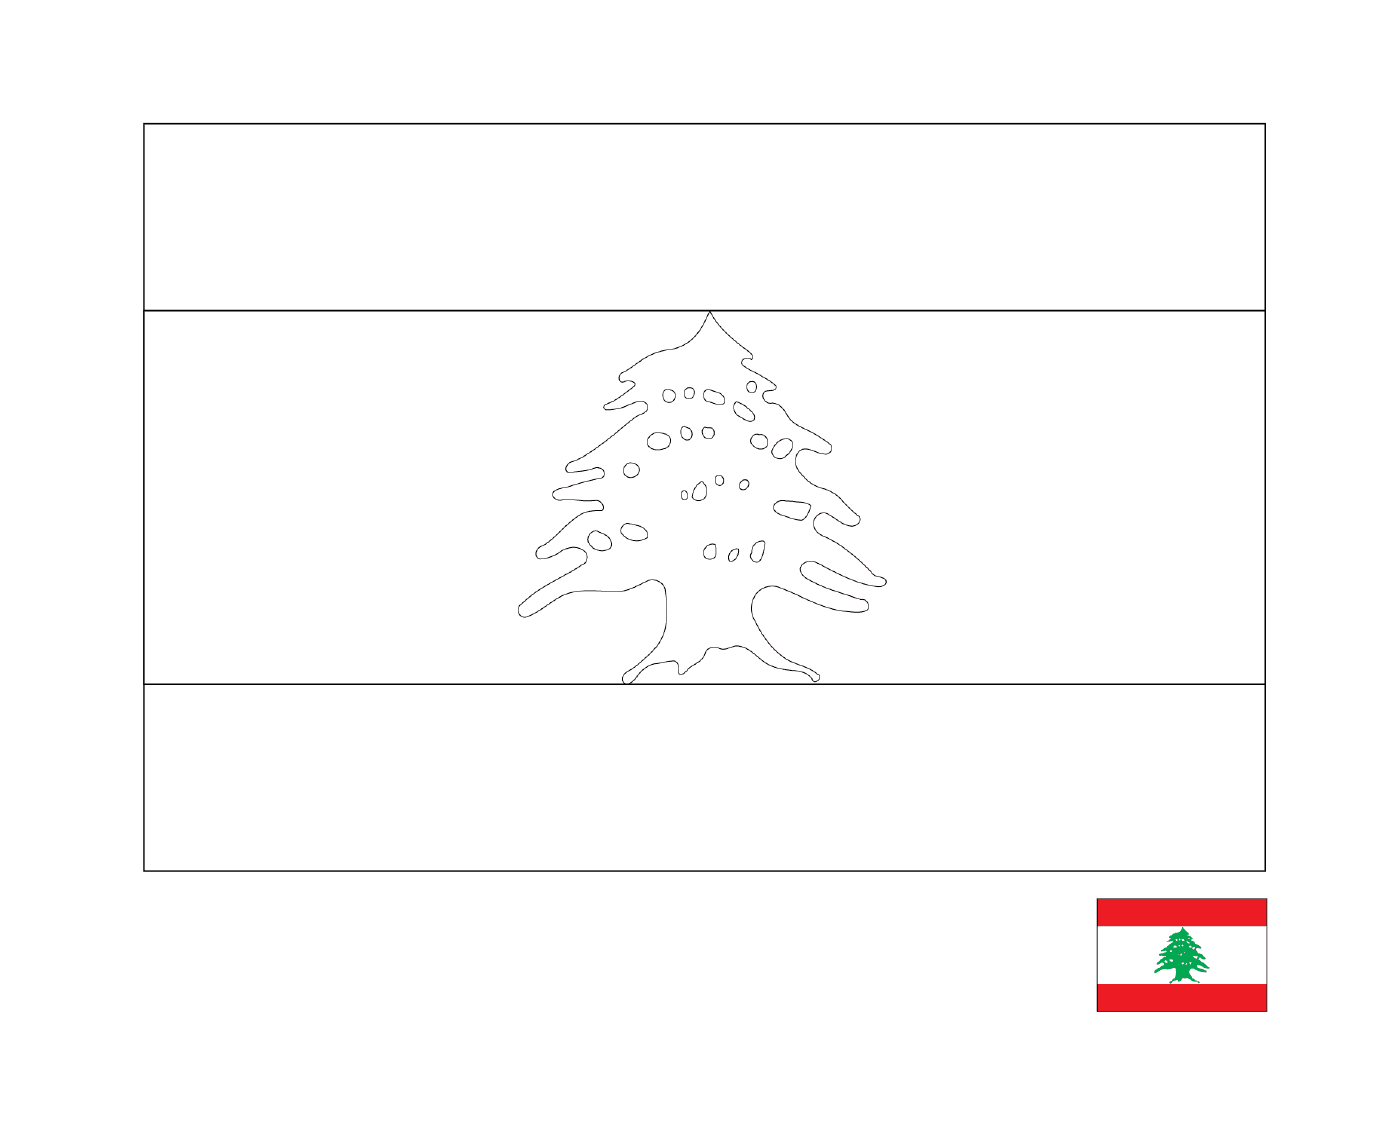  علم لبنان 